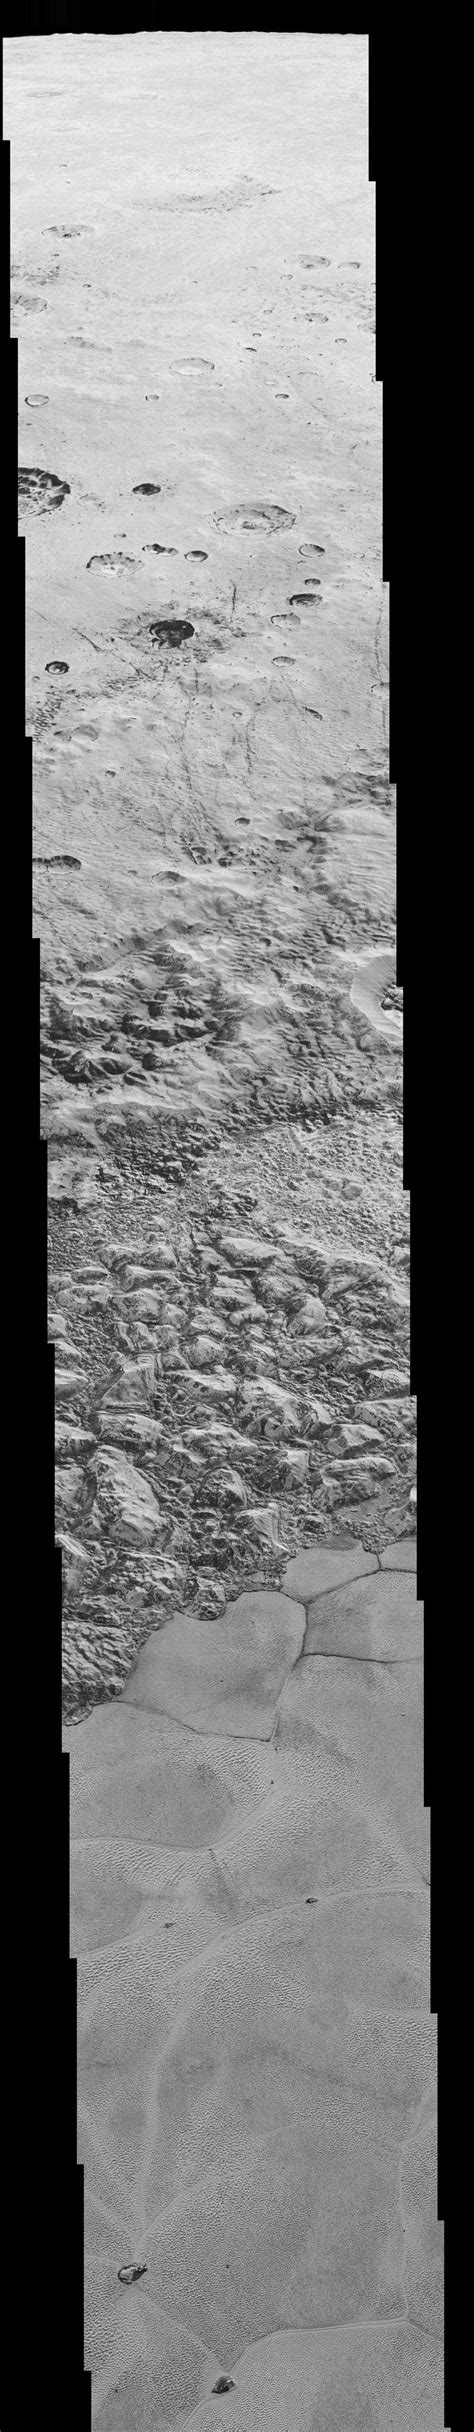 New Nasa Photos Show Plutos Surface In Eye Popping Detail Huffpost